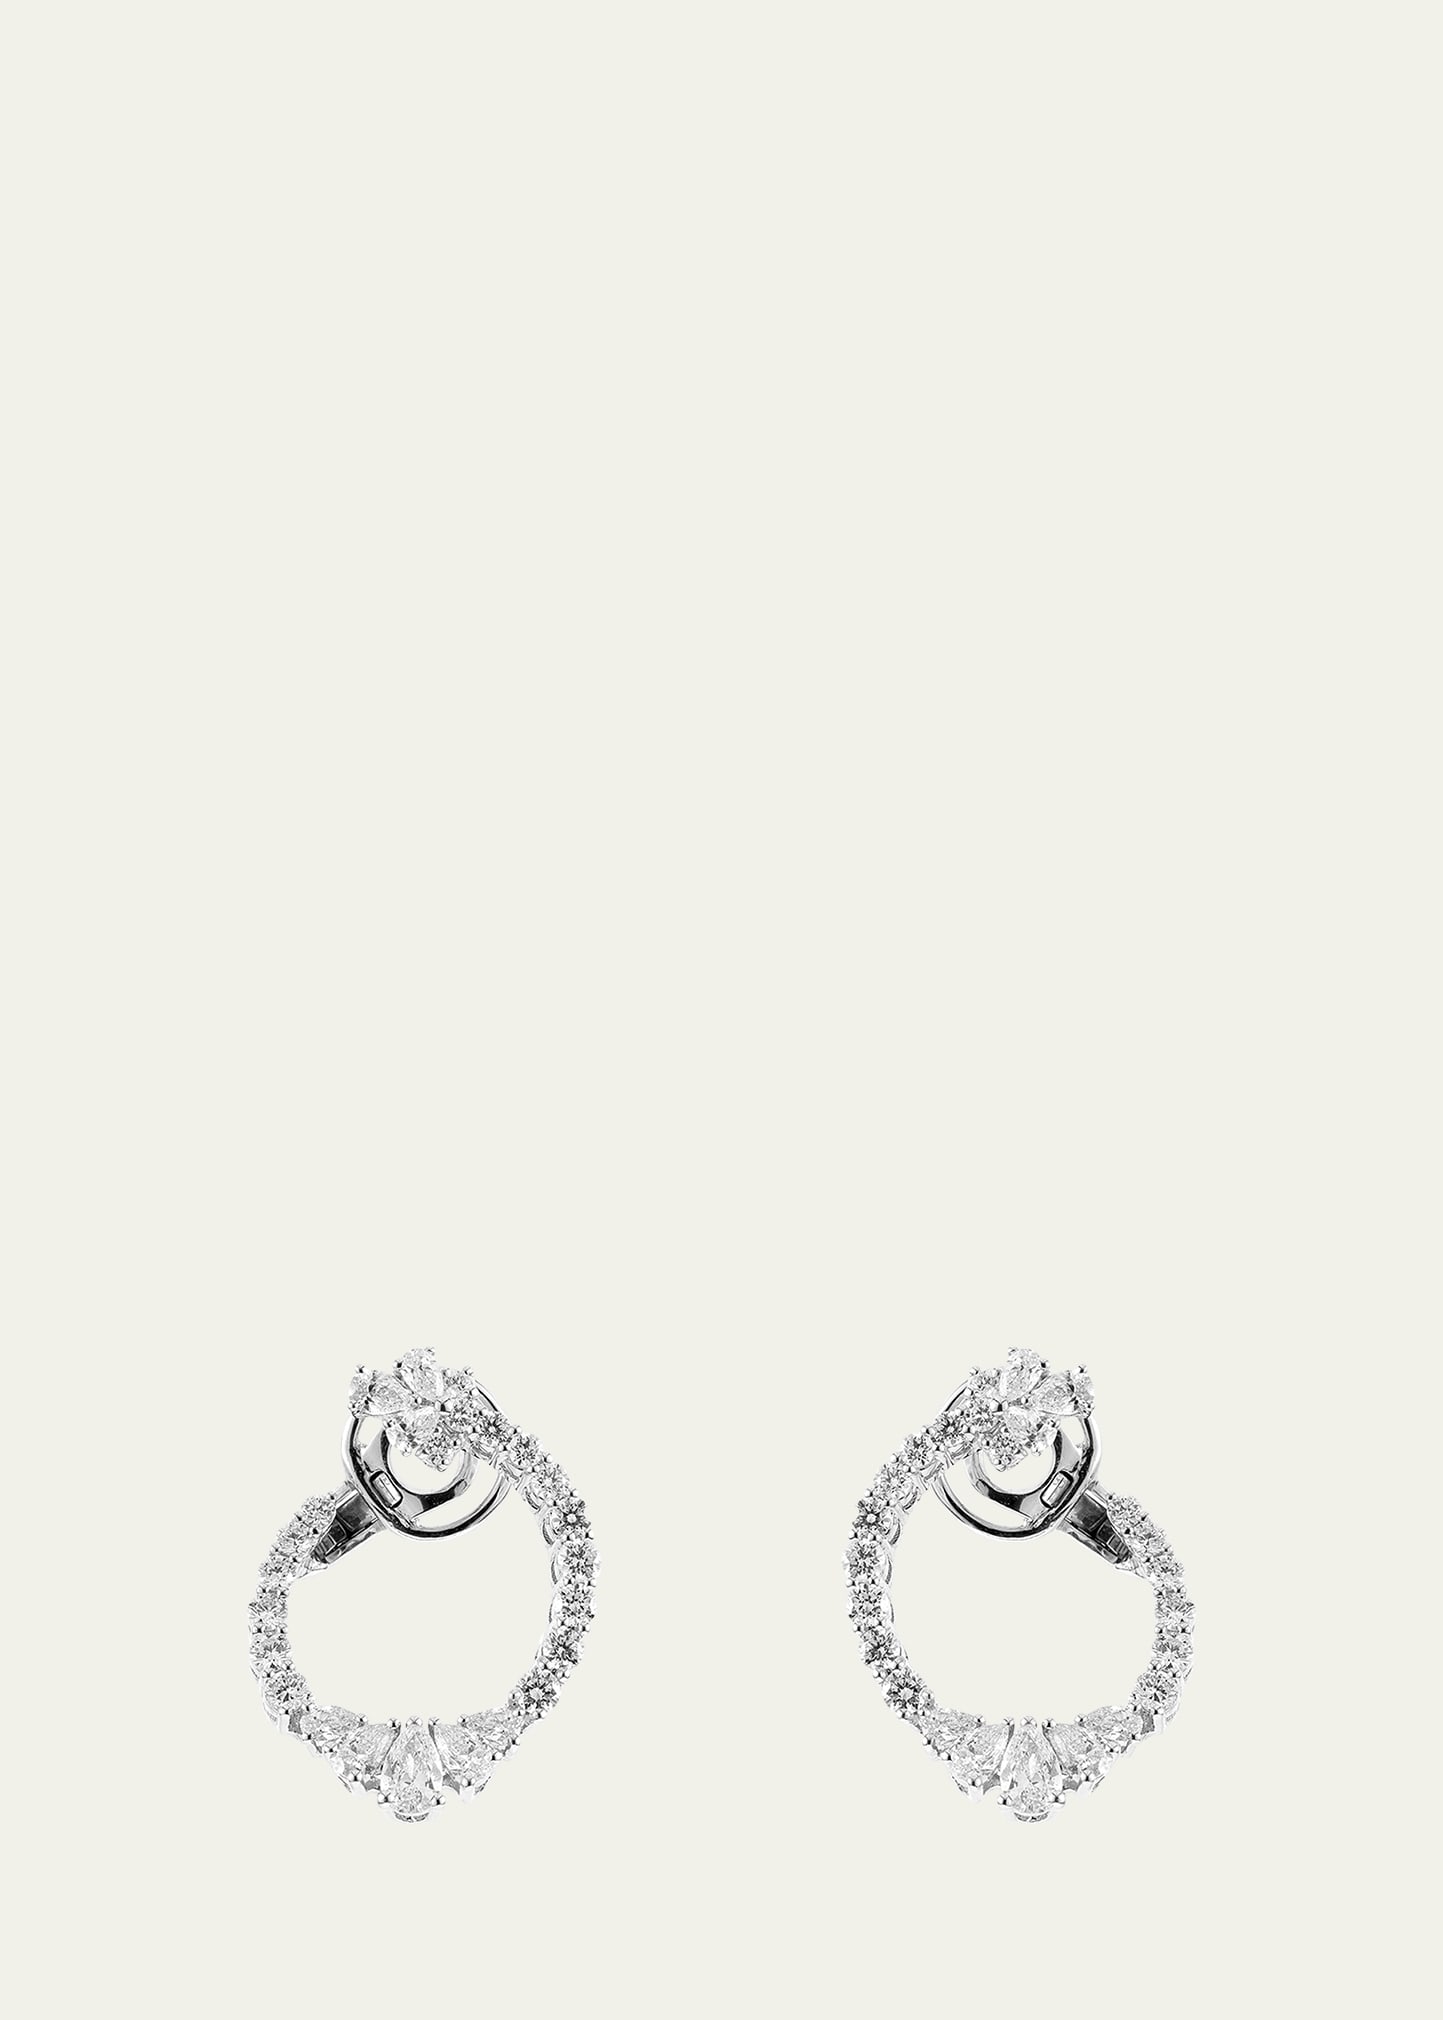 Yeprem White Gold Earrings With Diamonds, 2.52tcw